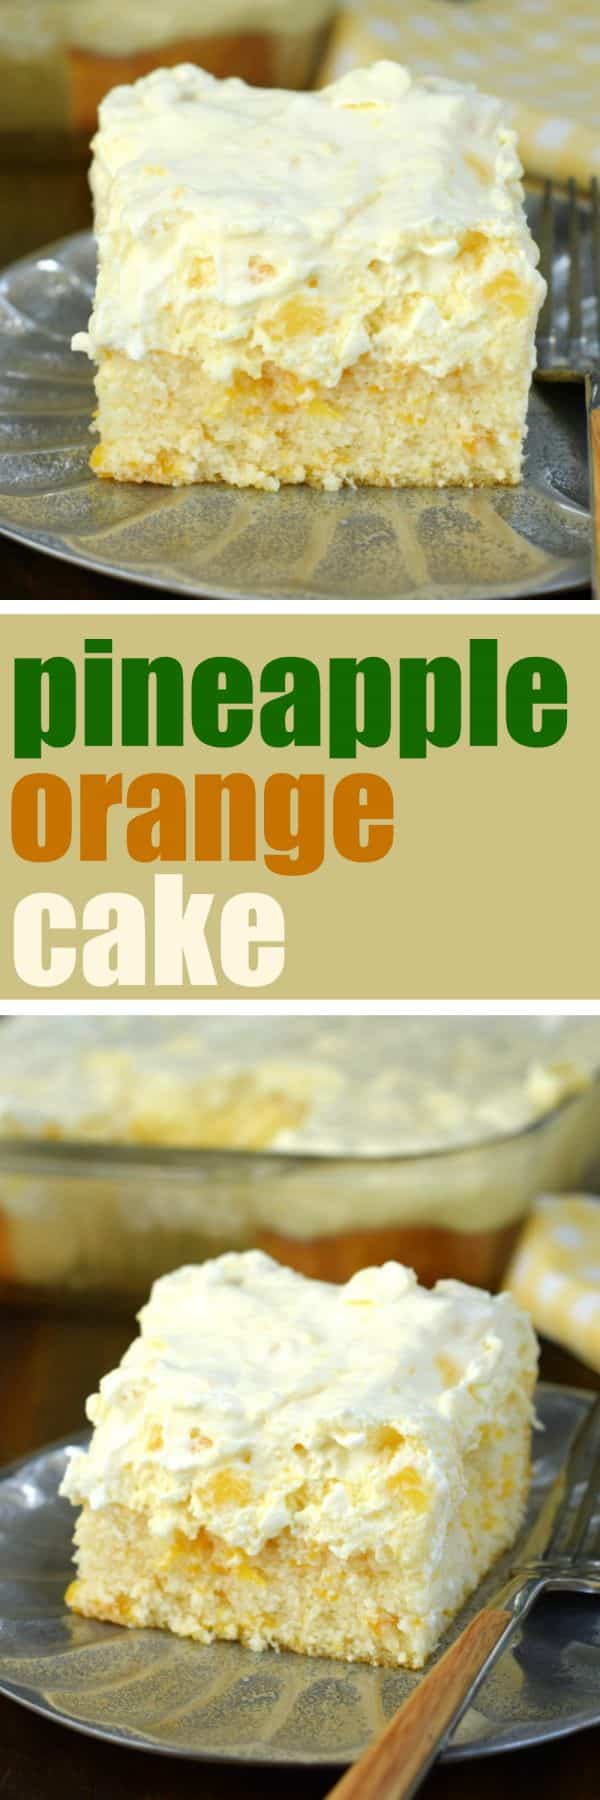 Pineapple Orange Cake - Shugary Sweets